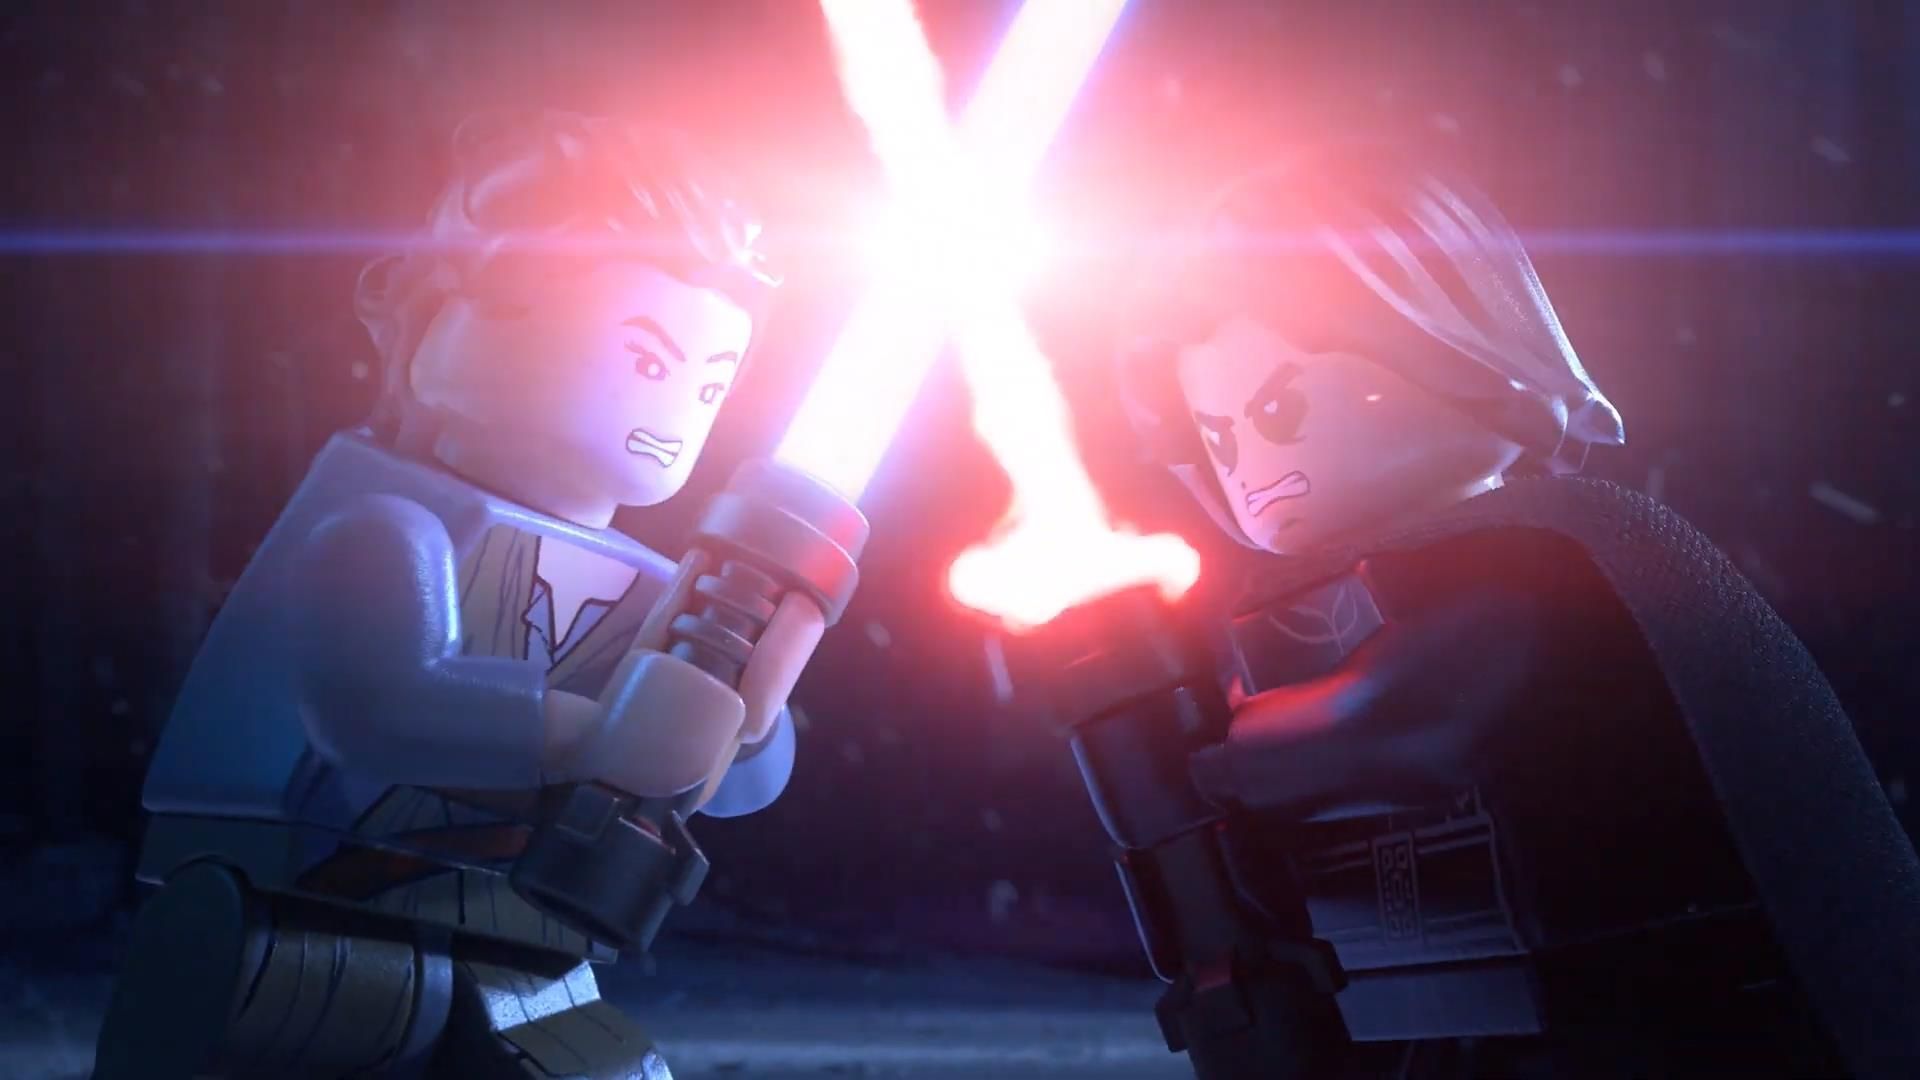 LEGO Star Wars: The Skywalker Saga feels like a proper step